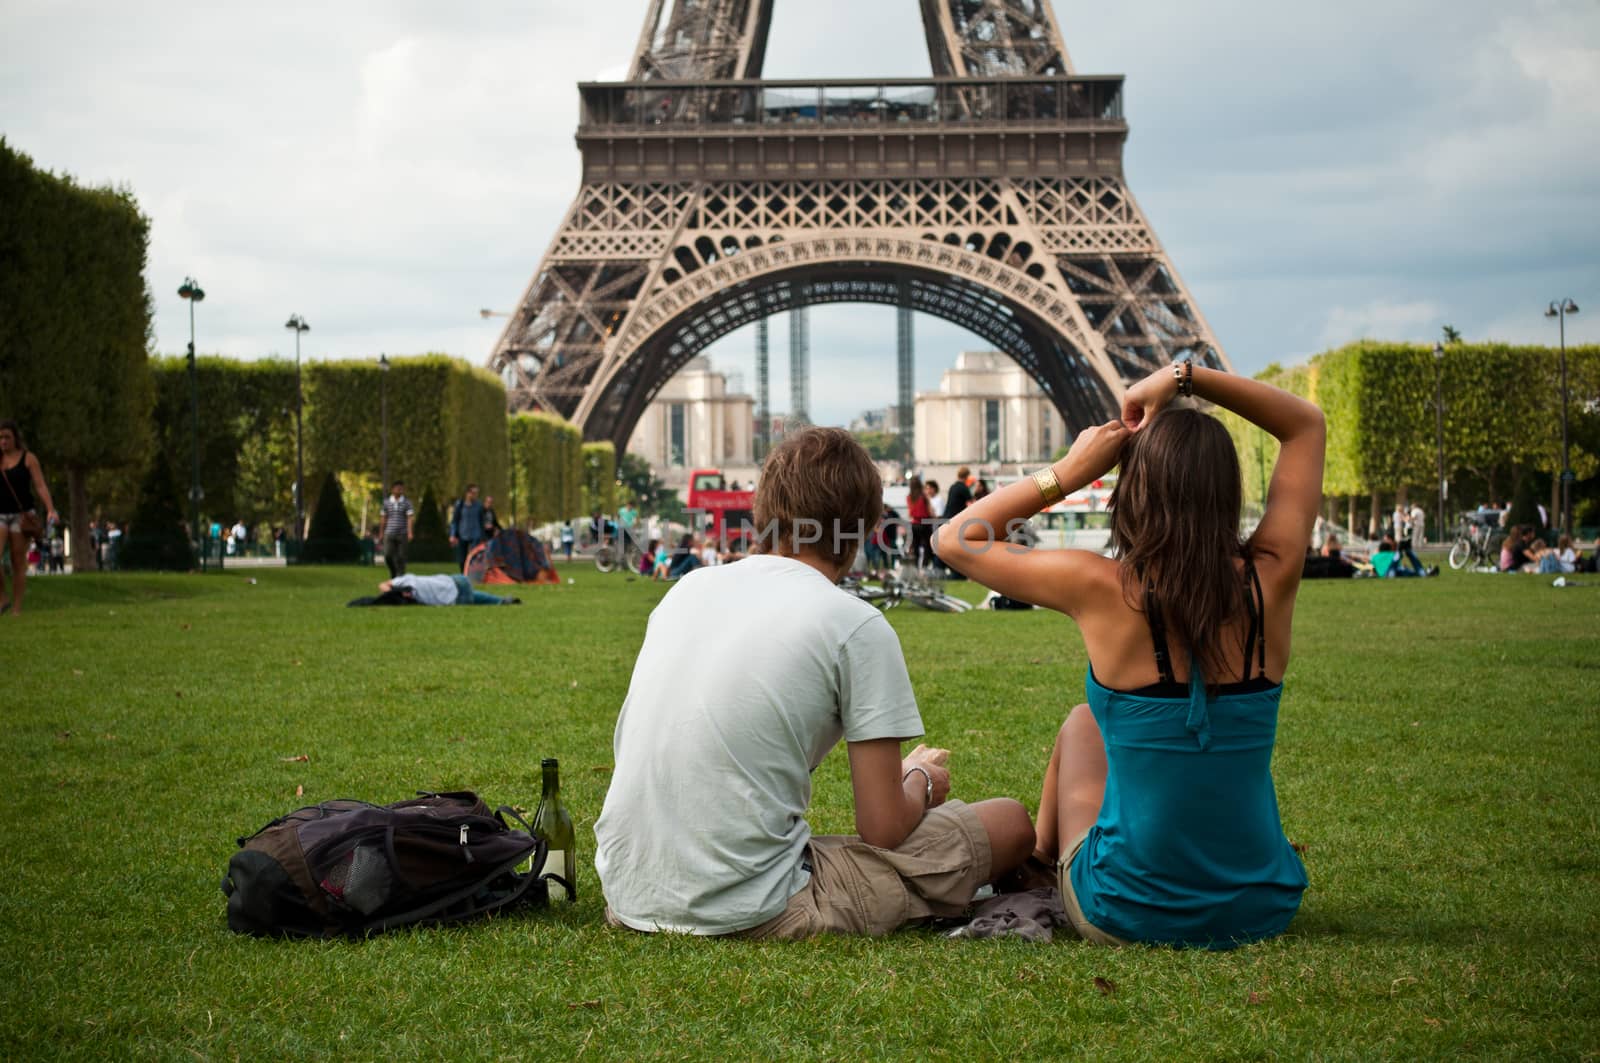 couple in Eiffel Tower in Paris by NeydtStock